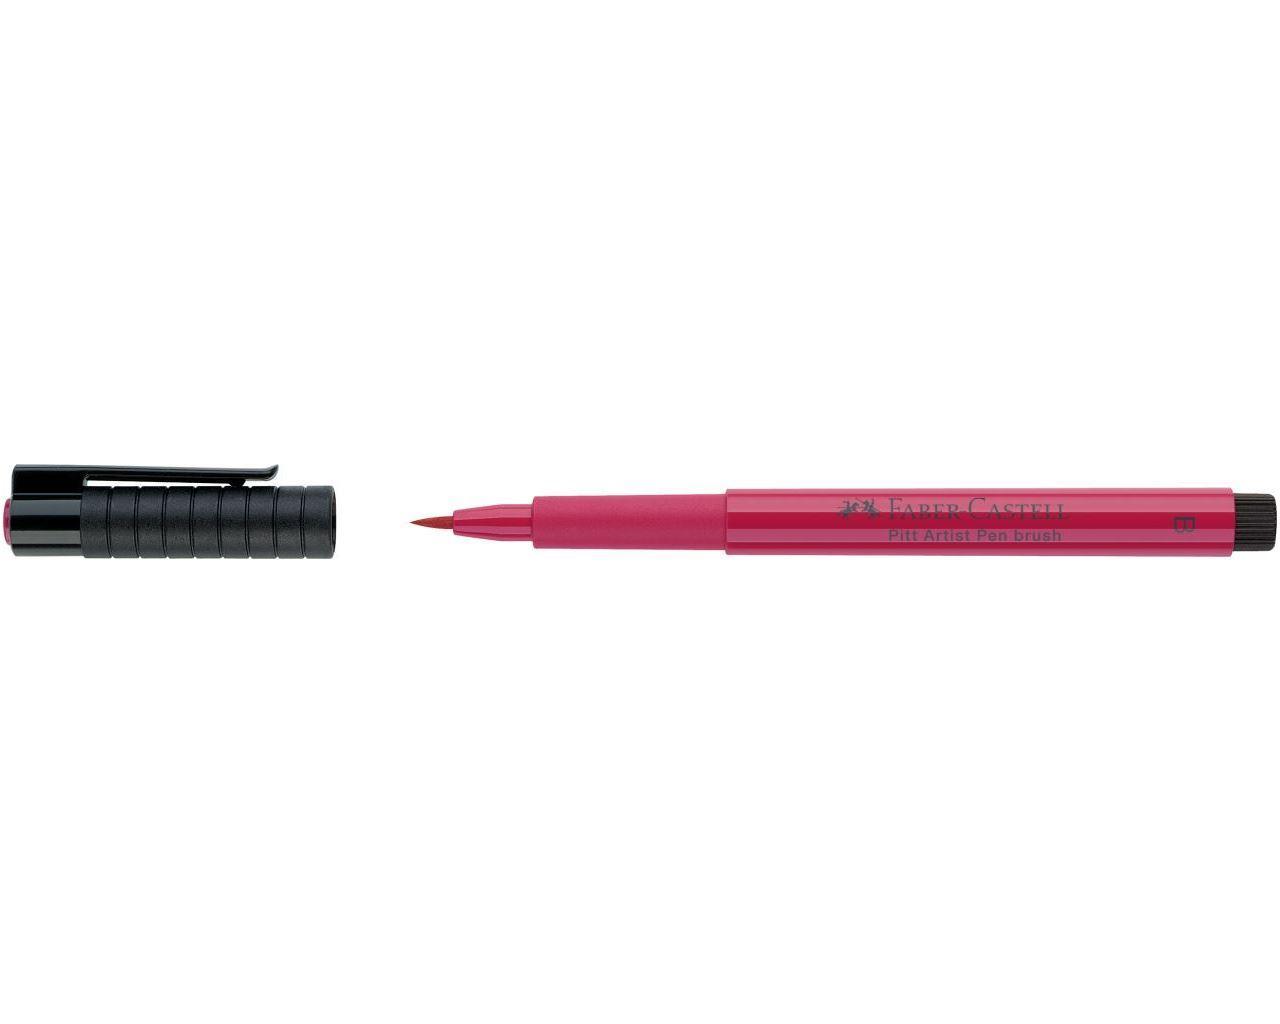 Penselpenna Ritpenna Faber-Castell PITT Artist pen Brush India ink pen, Studio box, Ateljélåda, 12 färger/fp